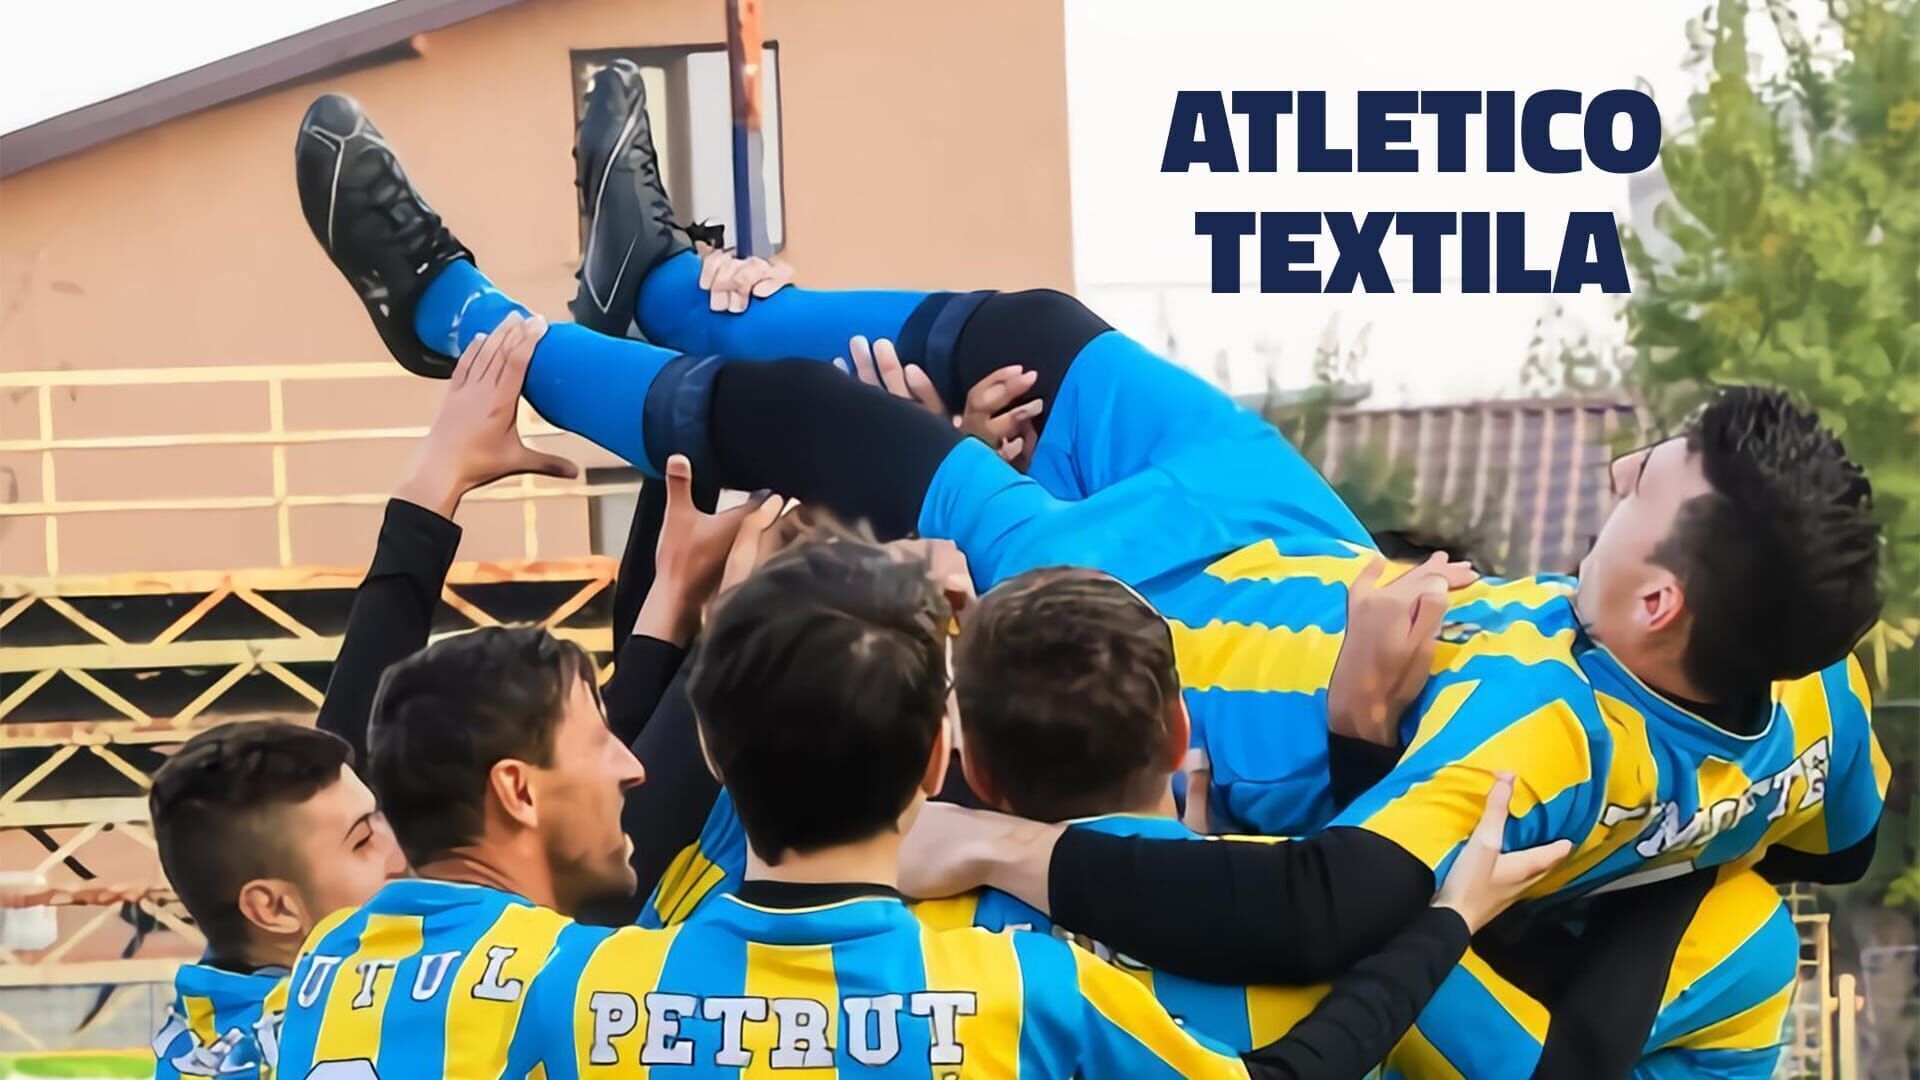 Atletico Textila - Bancul cu orbul